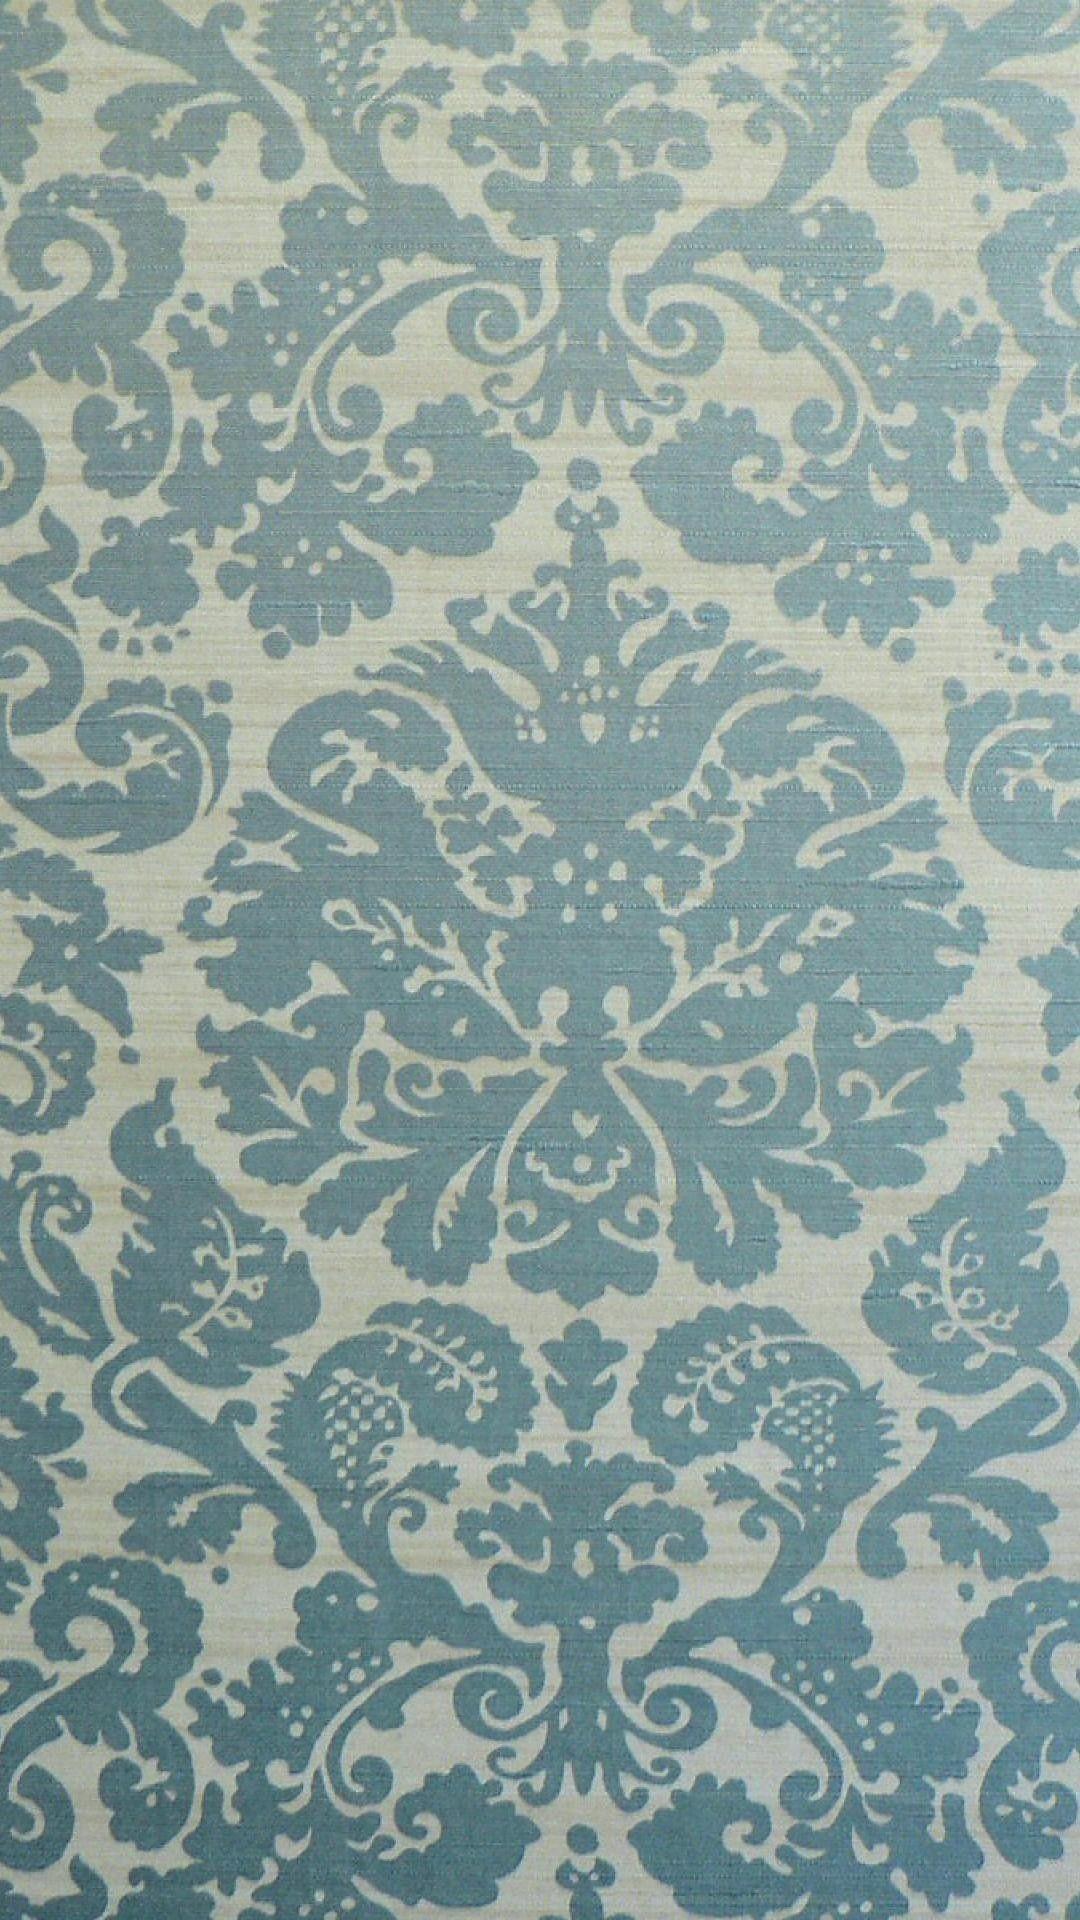 vintage pattern iphone wallpaper